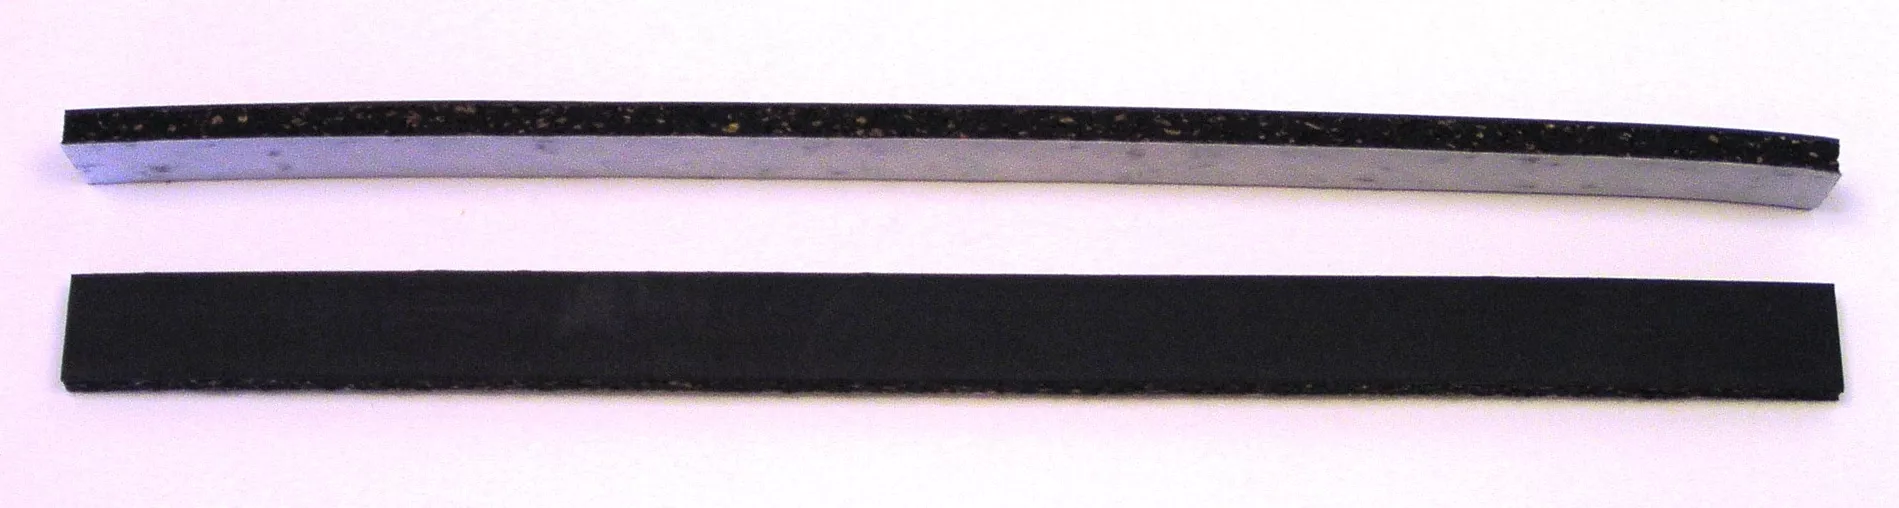 3M™ File Belt Sander Platen Pad Material 28379, 1/2 in x 7 in x 1/8 in
Hard, 10 ea/Case